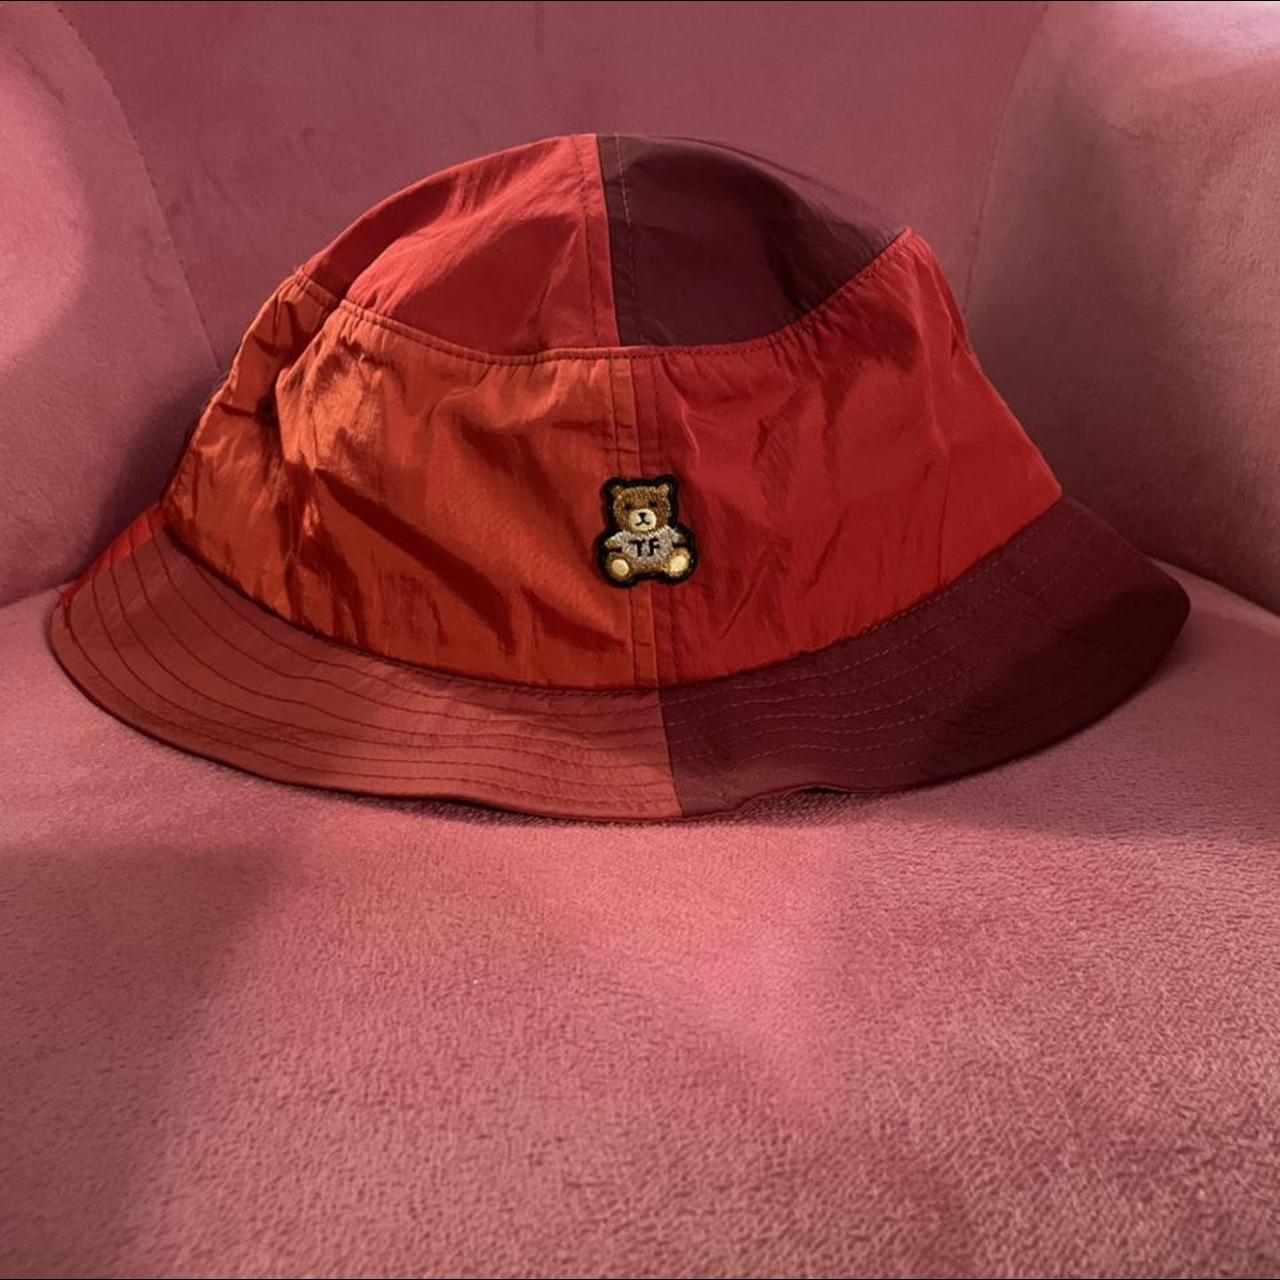 Red patchwork rain resistant bucket hat by Teddy... - Depop